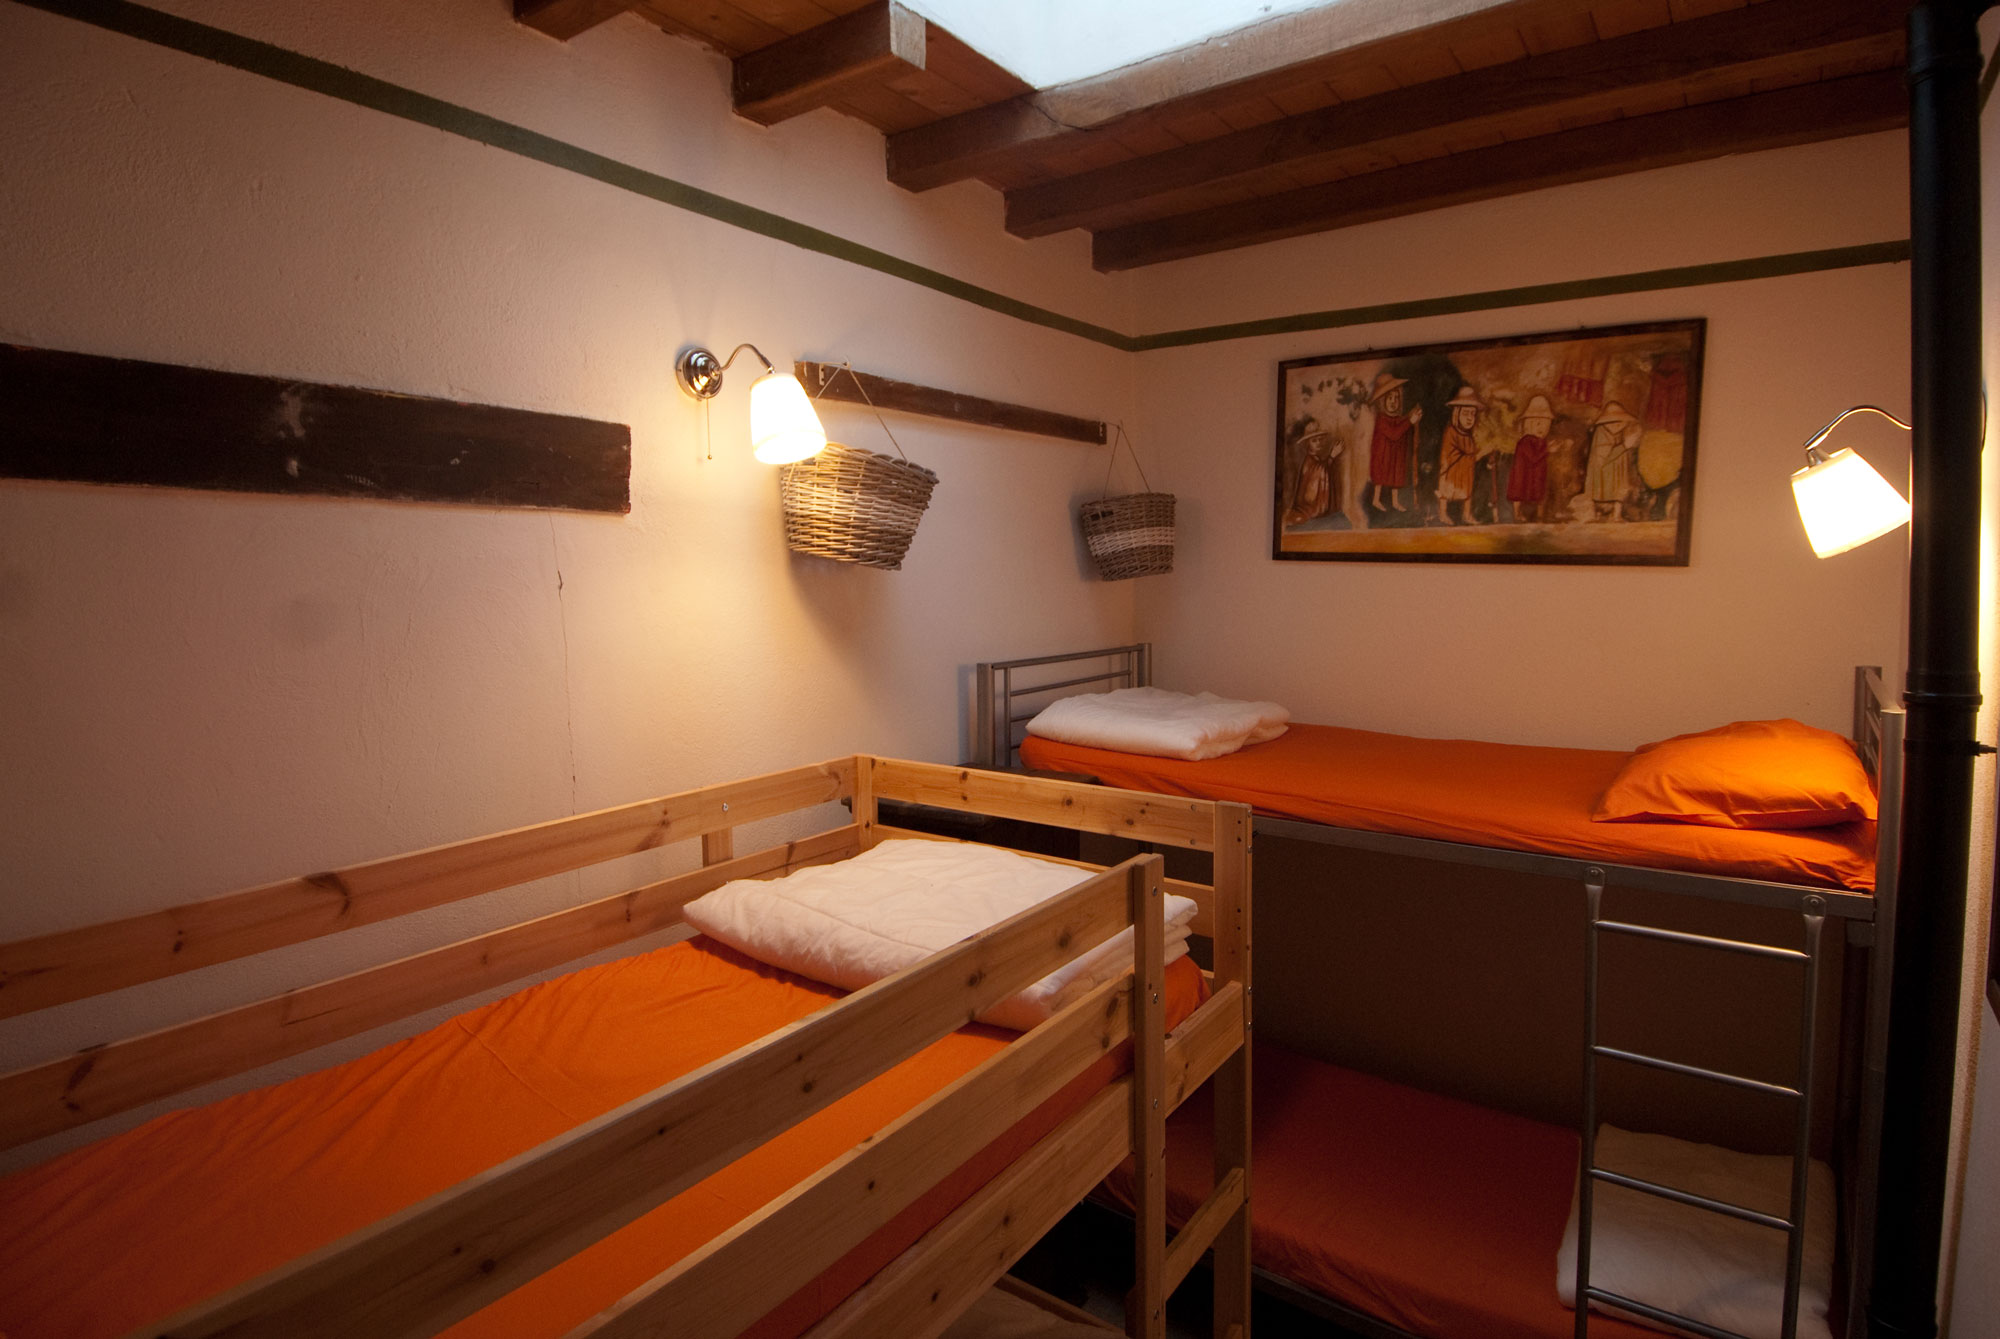 Bedroom with bunk beds